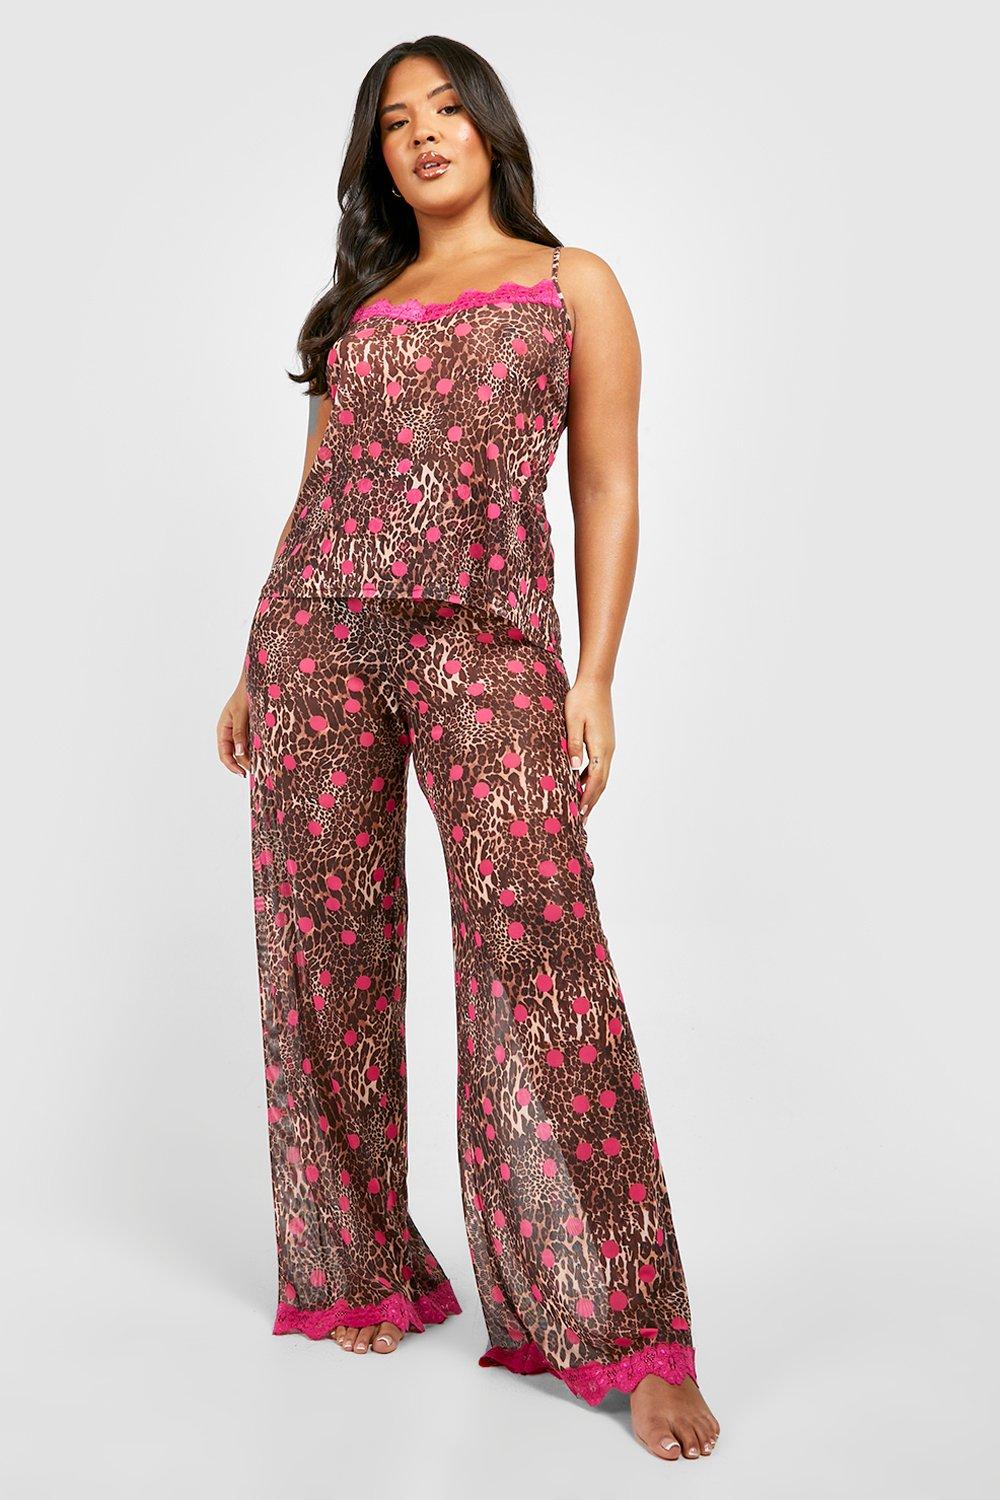 Plus Leopard Print Polka Dot Lace Trim Cami Top & Trousers Pyjama Set